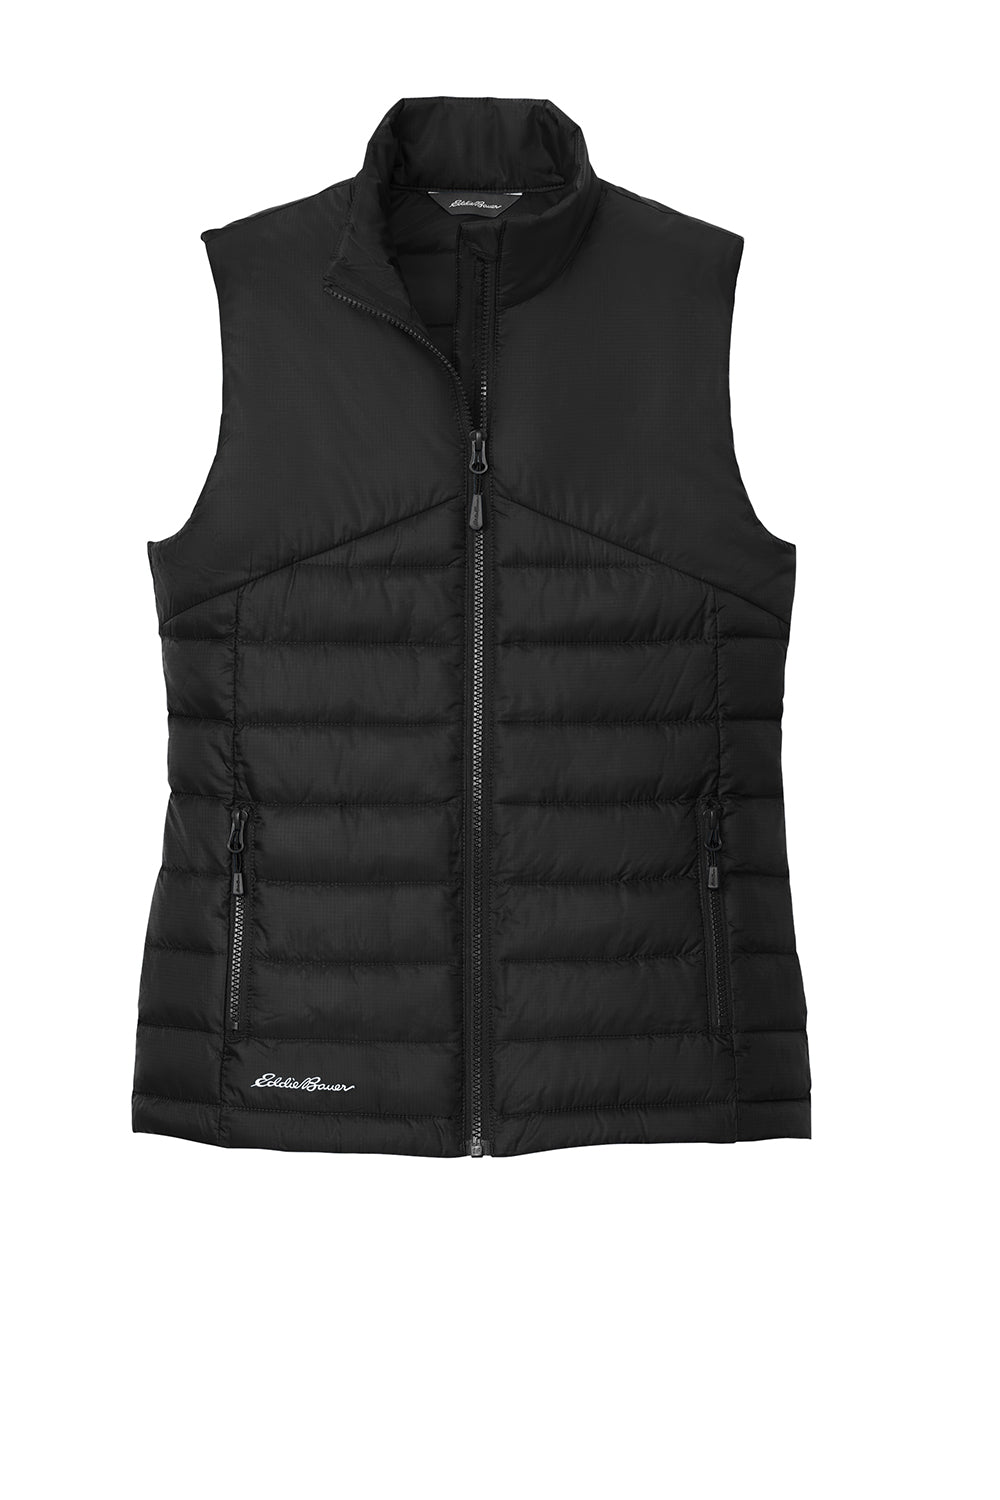 Eddie Bauer EB513 Womens Water Resistant Quilted Full Zip Vest Deep Black Flat Front